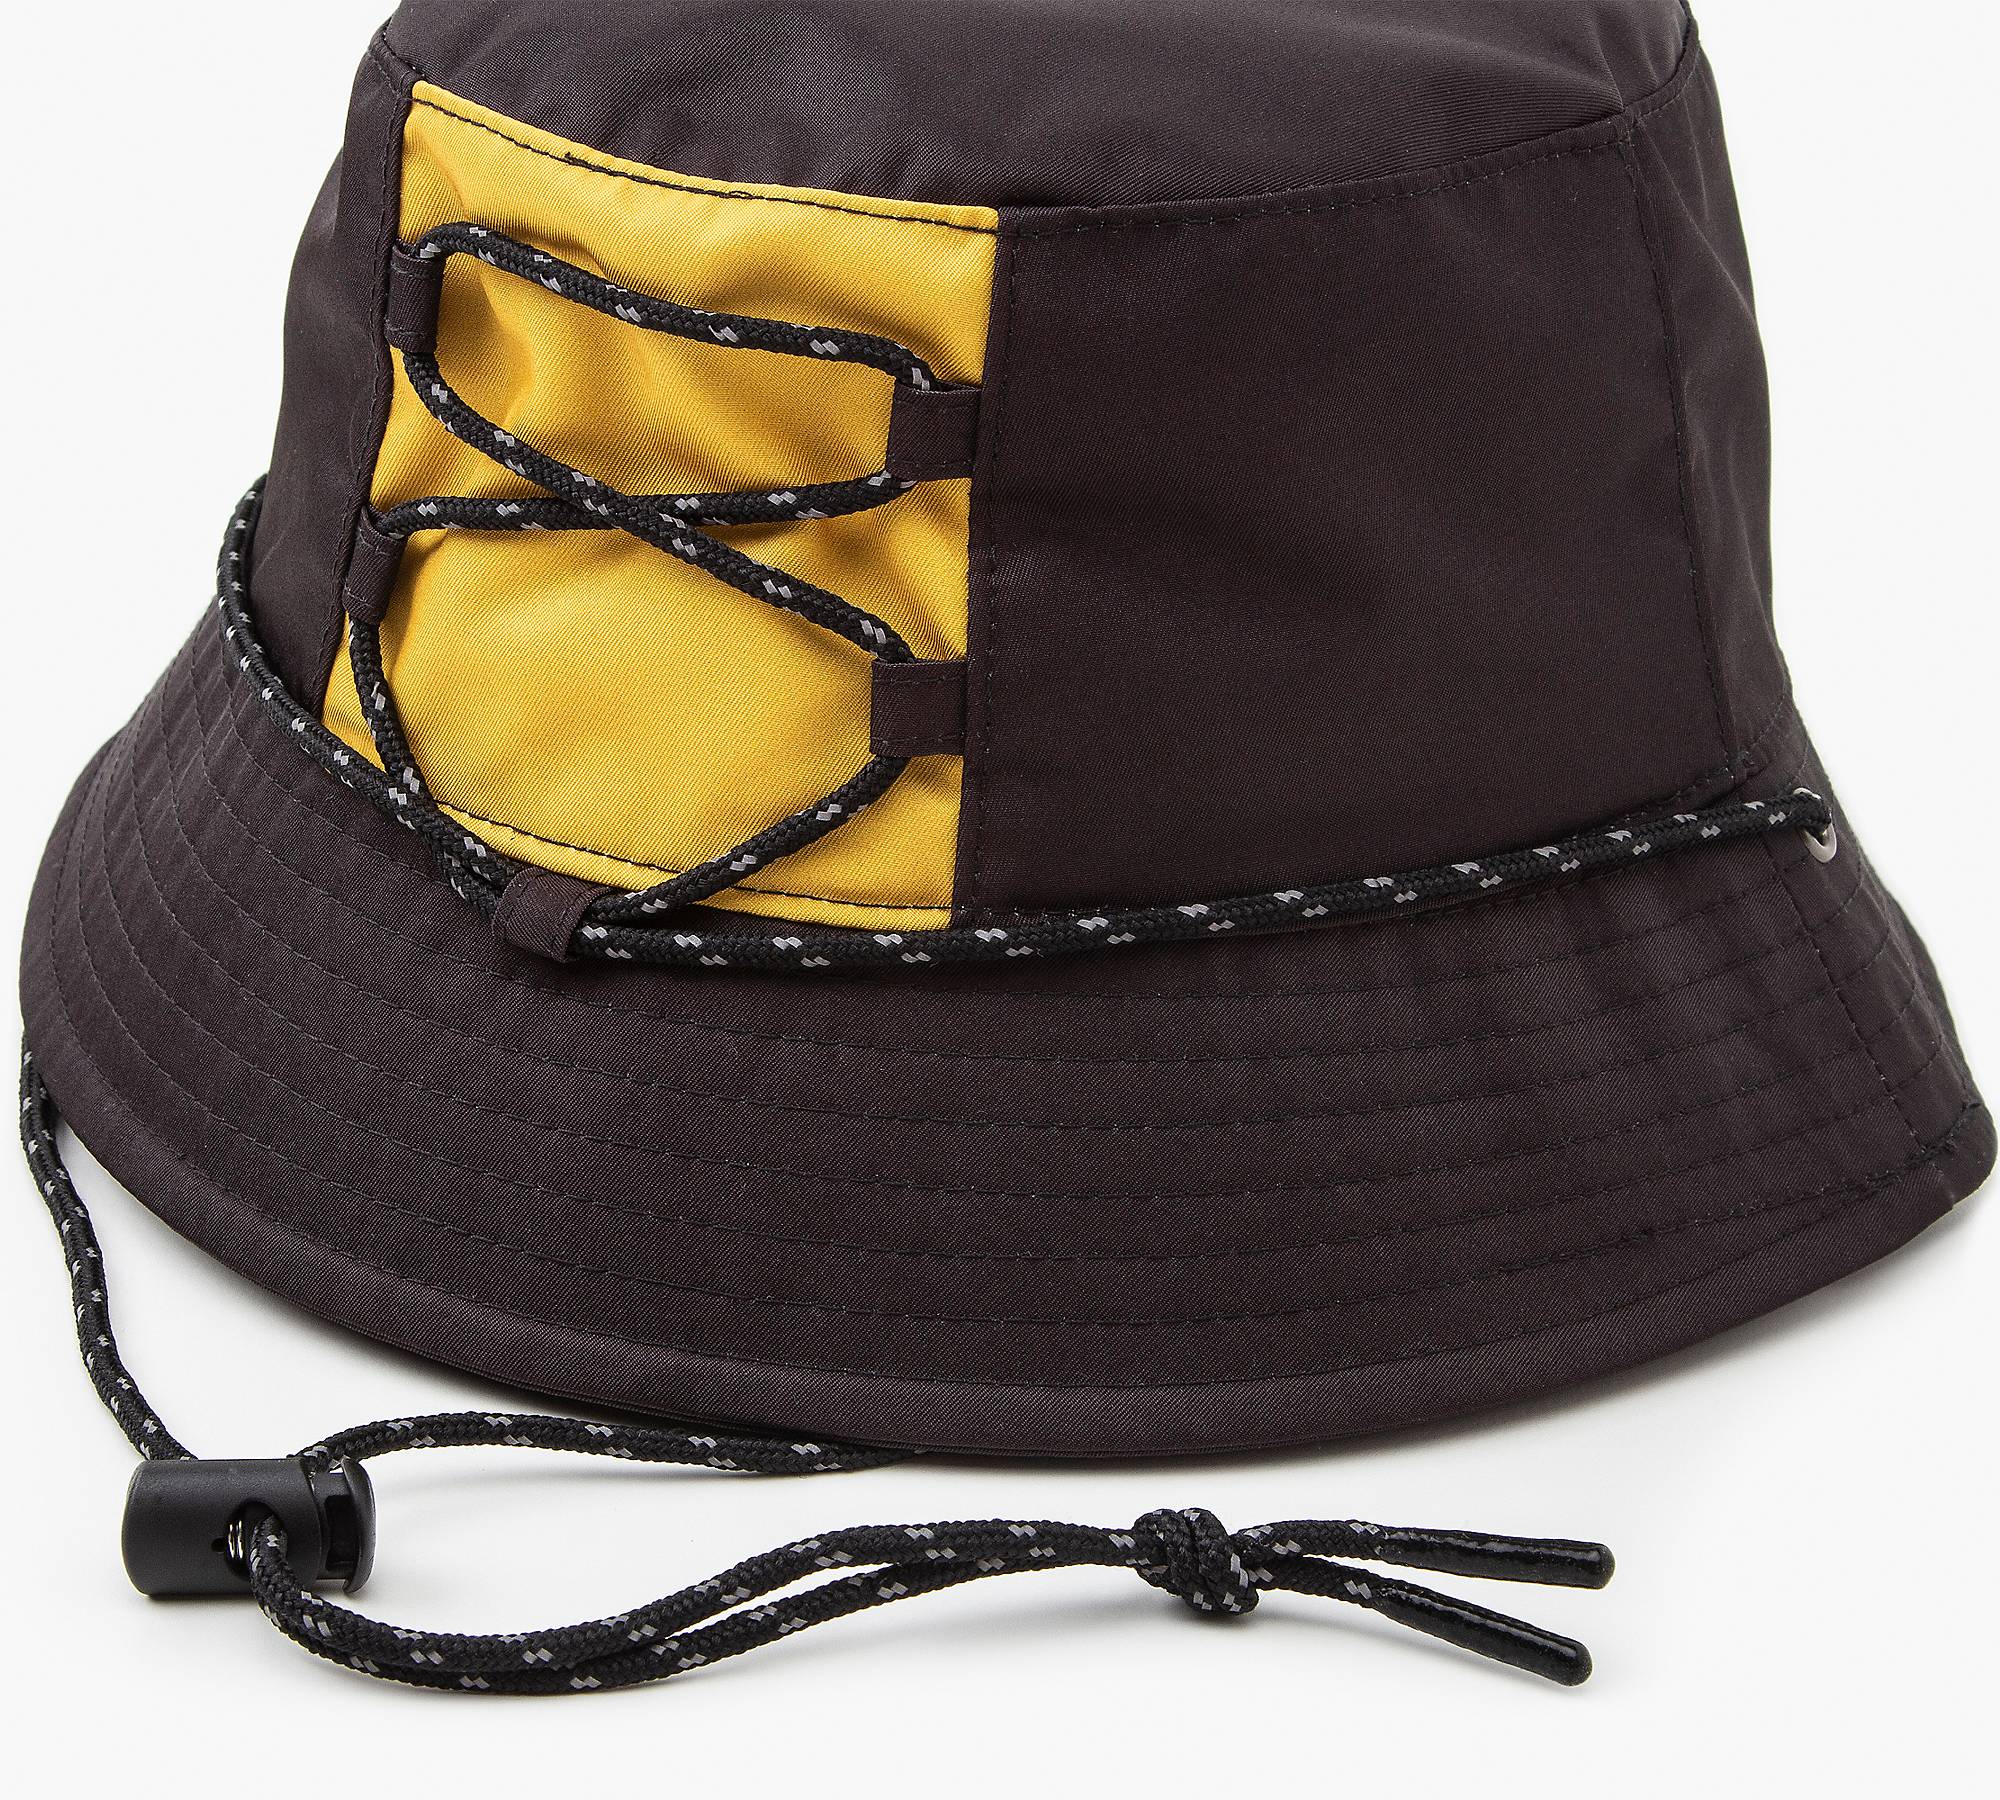 Utility Bucket Hat - Black | Levi's® US